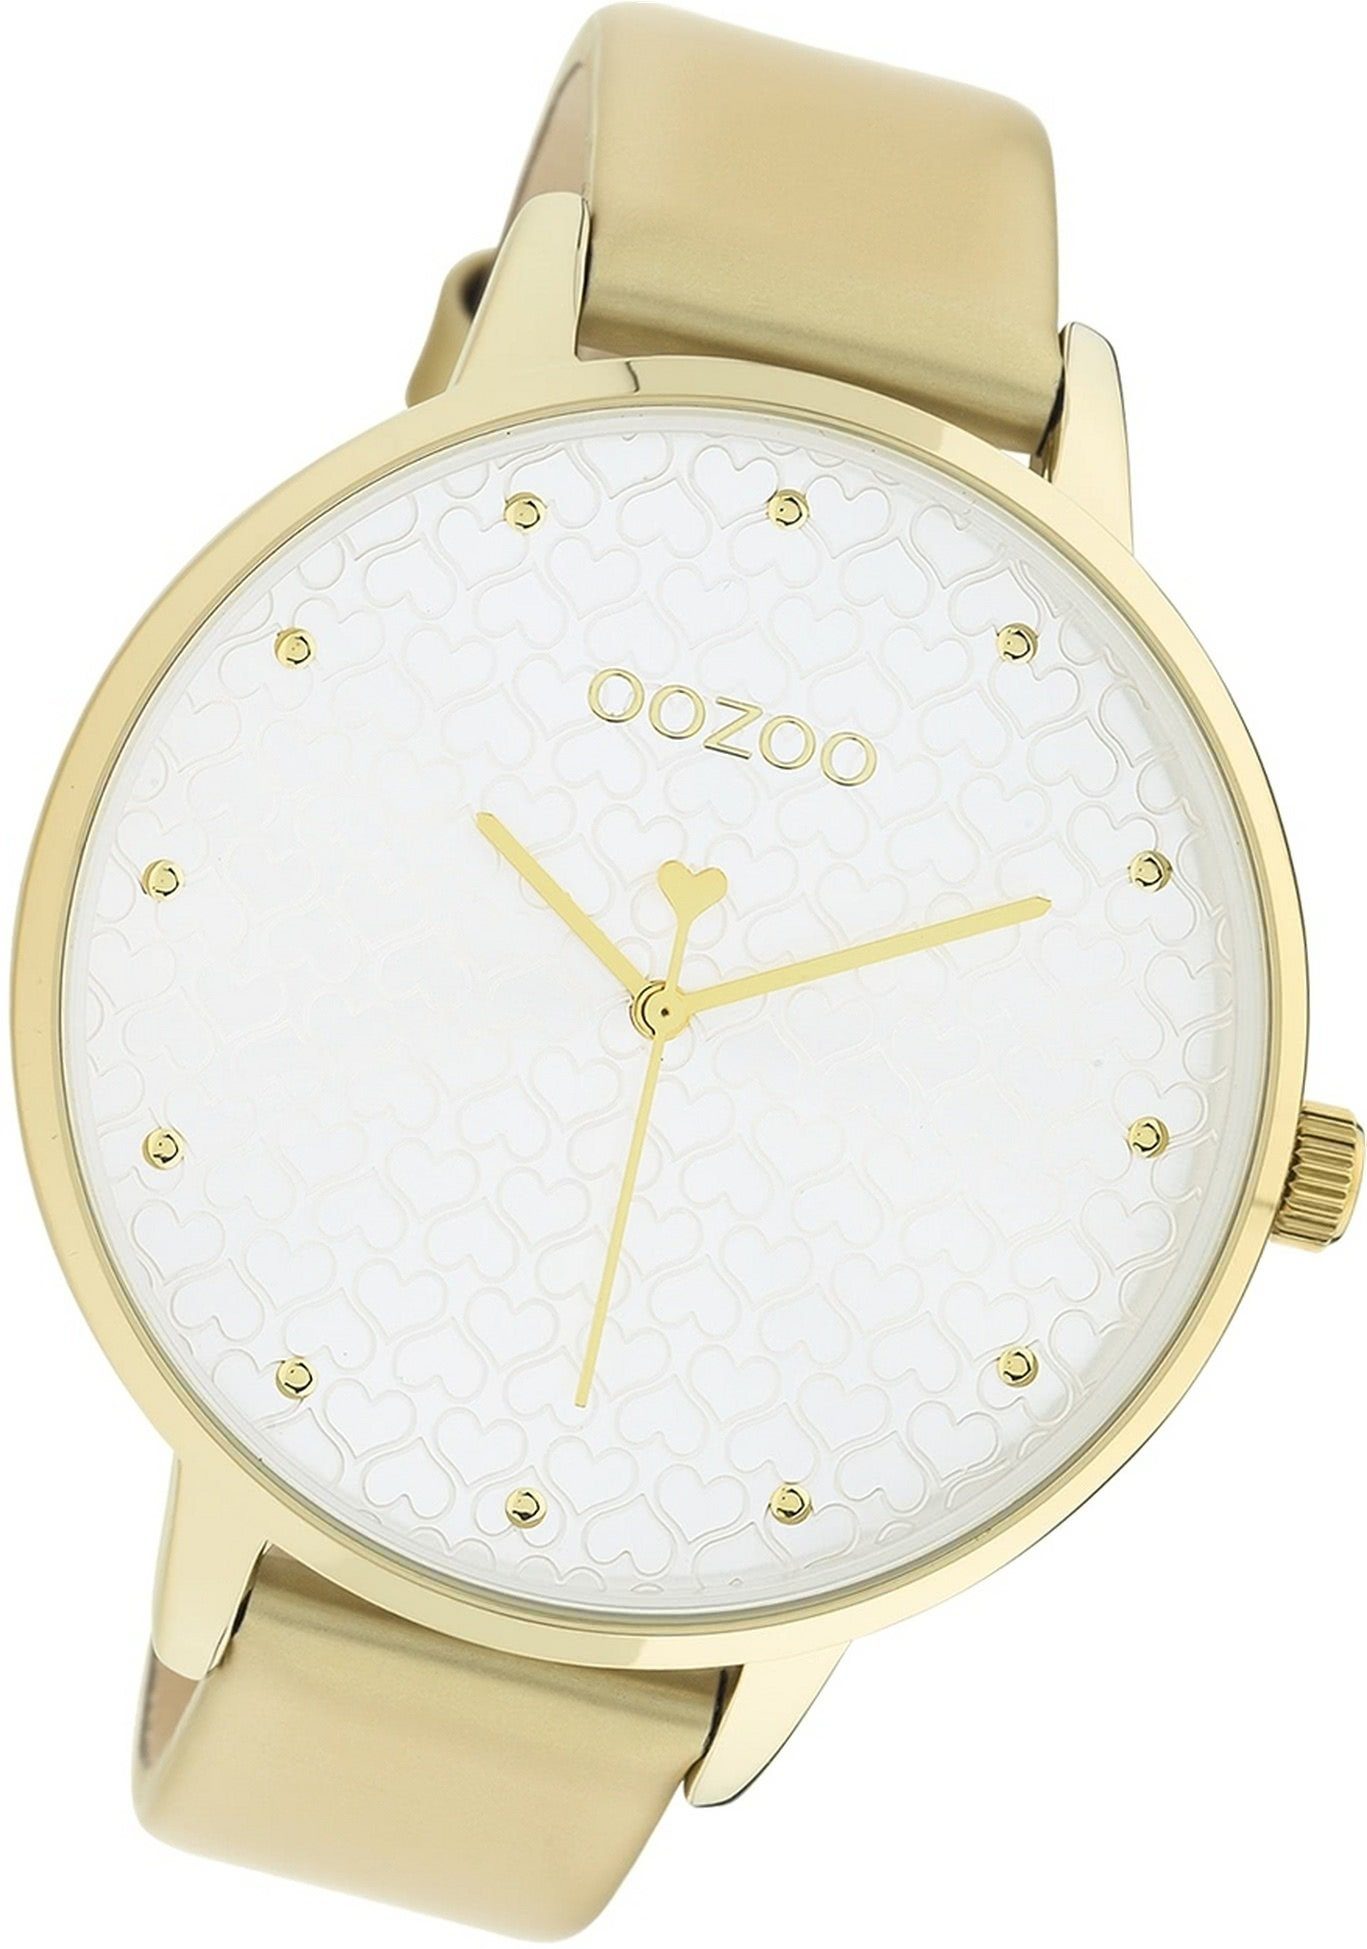 OOZOO Quarzuhr Oozoo Damen Armbanduhr Timepieces, Damenuhr Lederarmband gold, rundes Gehäuse, extra groß (ca. 48mm) | Quarzuhren